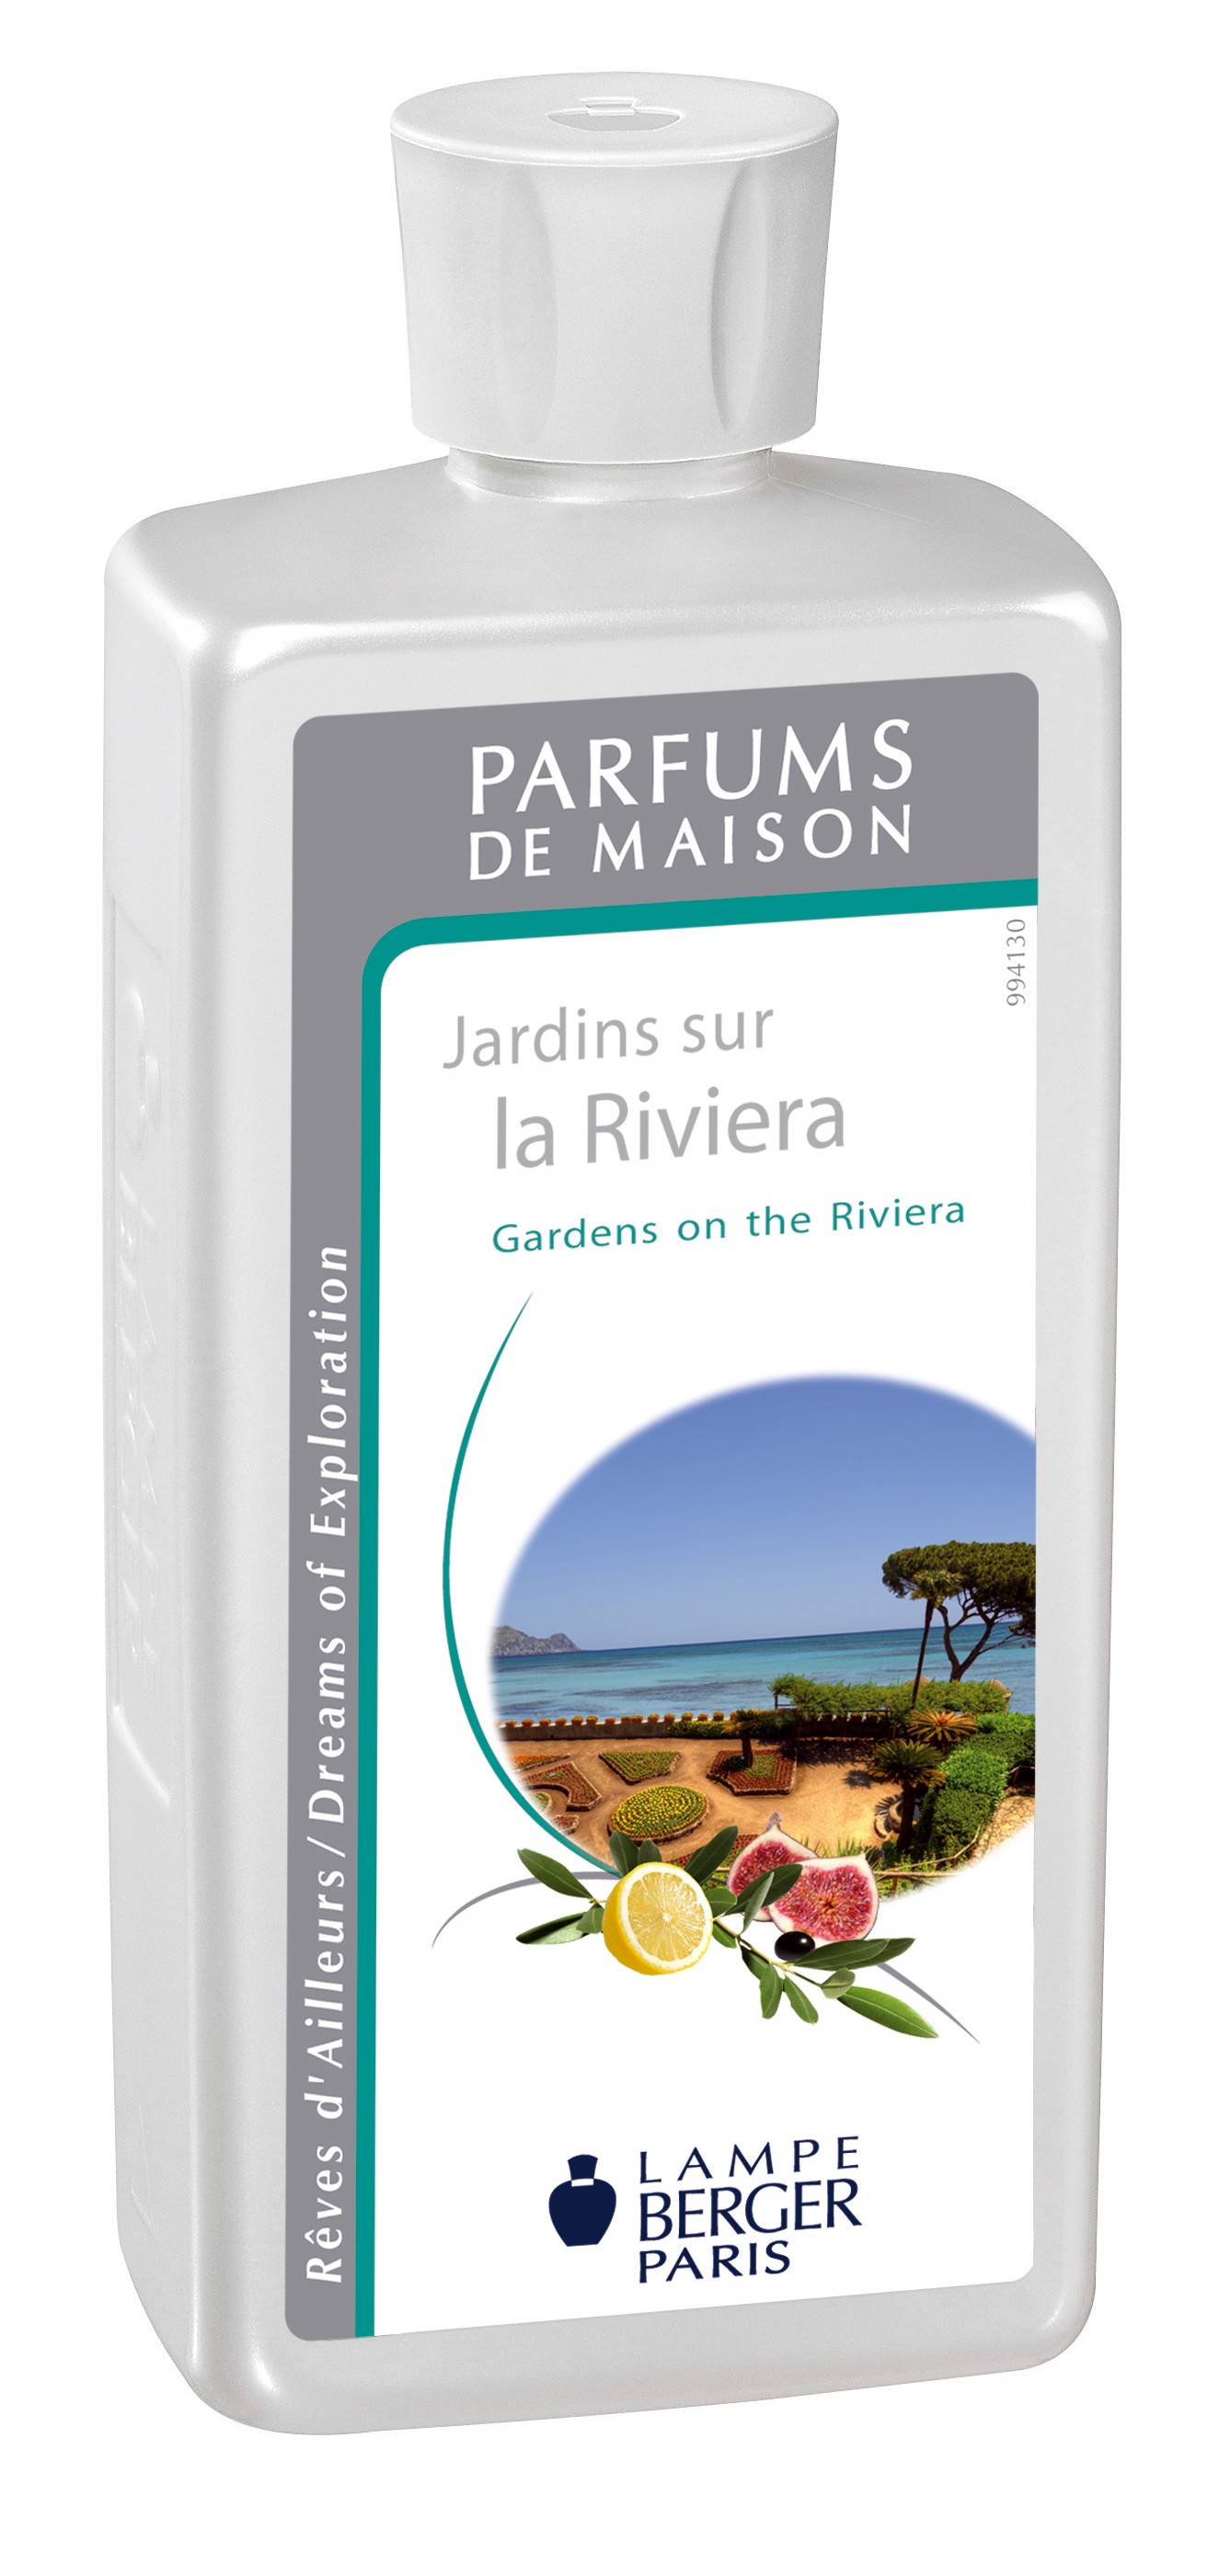 Jardins sur la Riviera